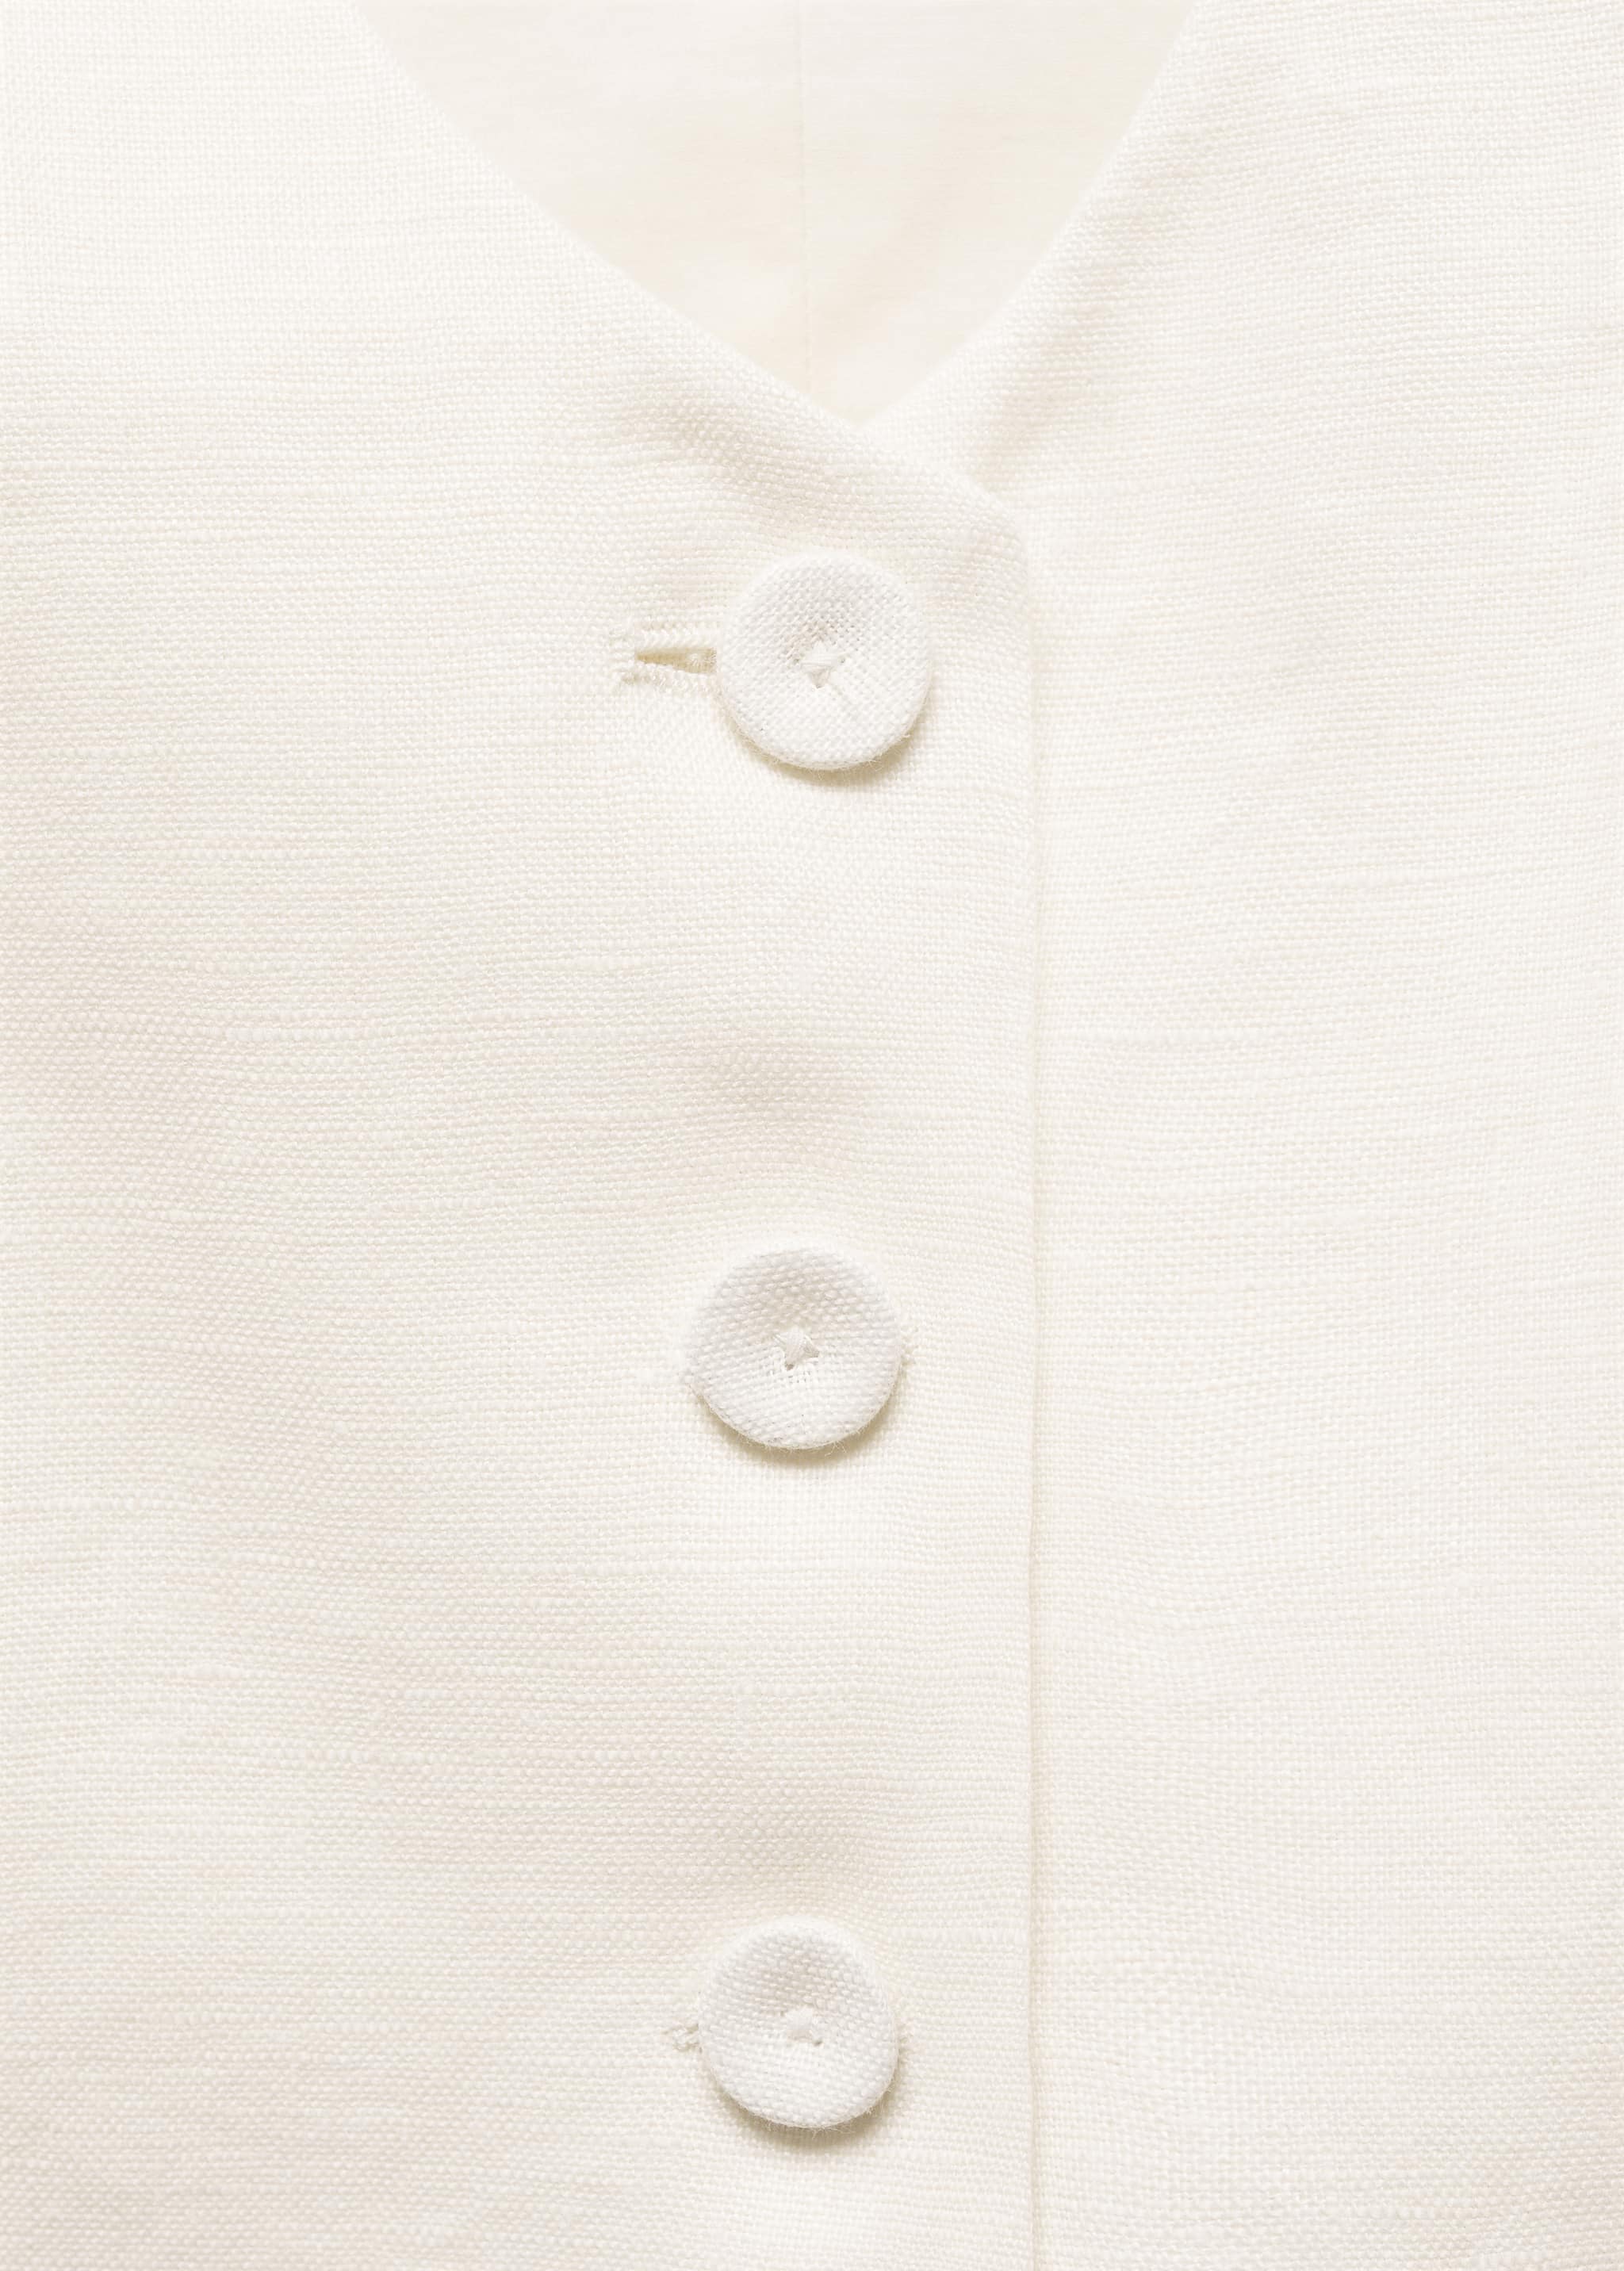 Linen suit waistcoat - Details of the article 8